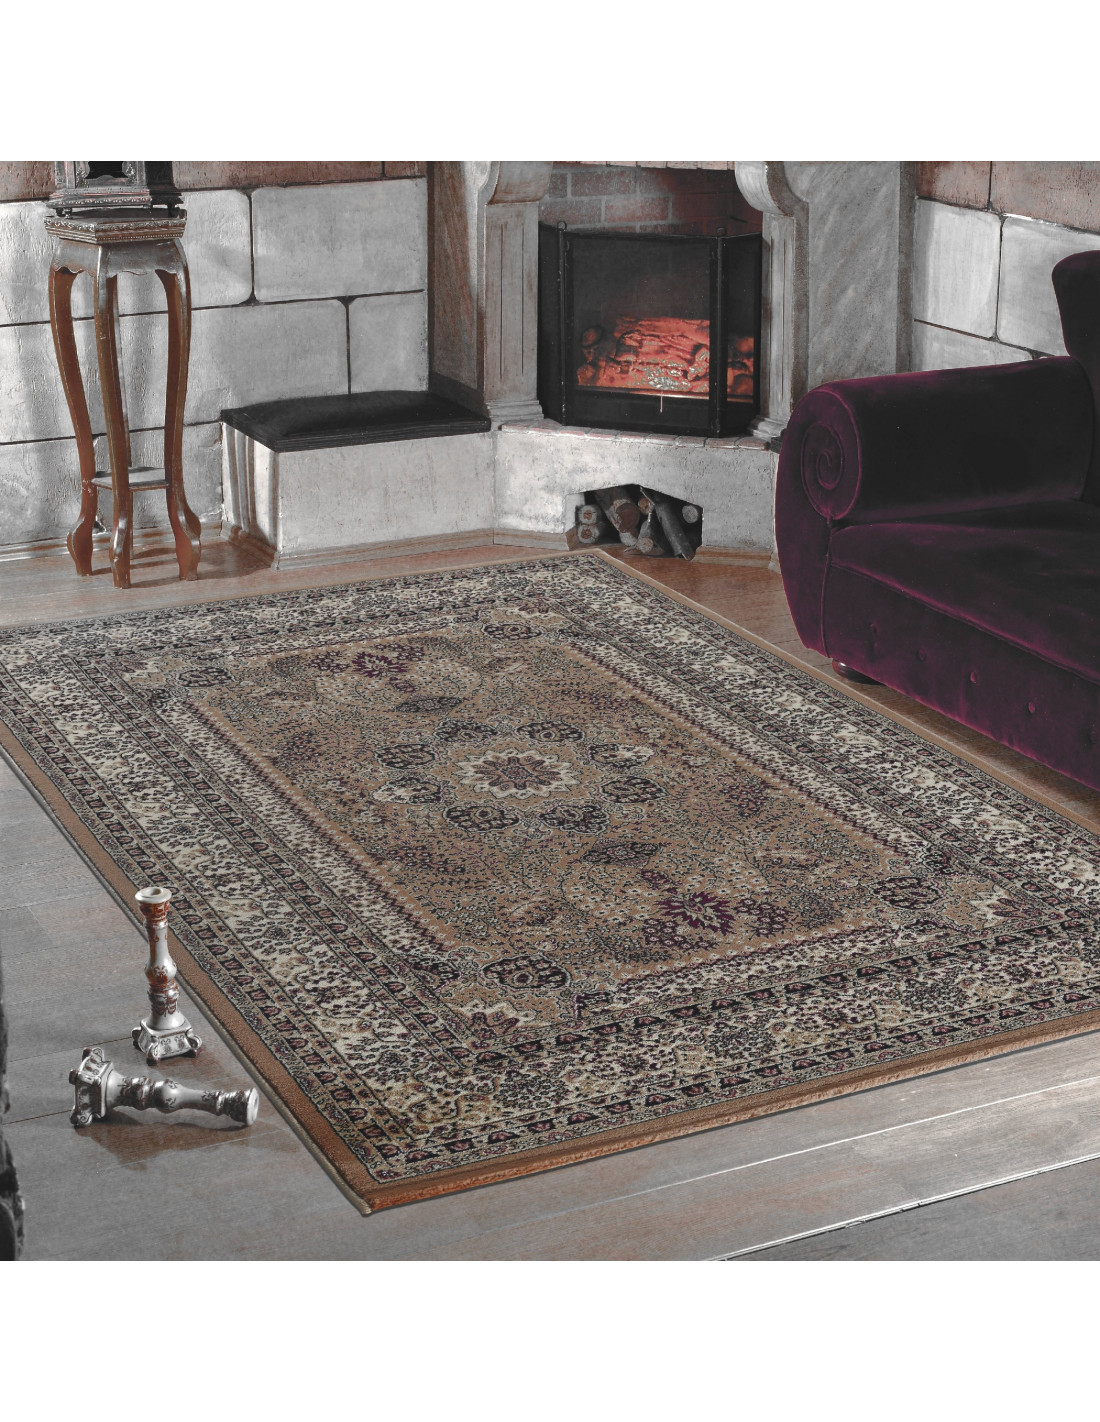 Classic oriental living room rug Marrakesh 0207 beige